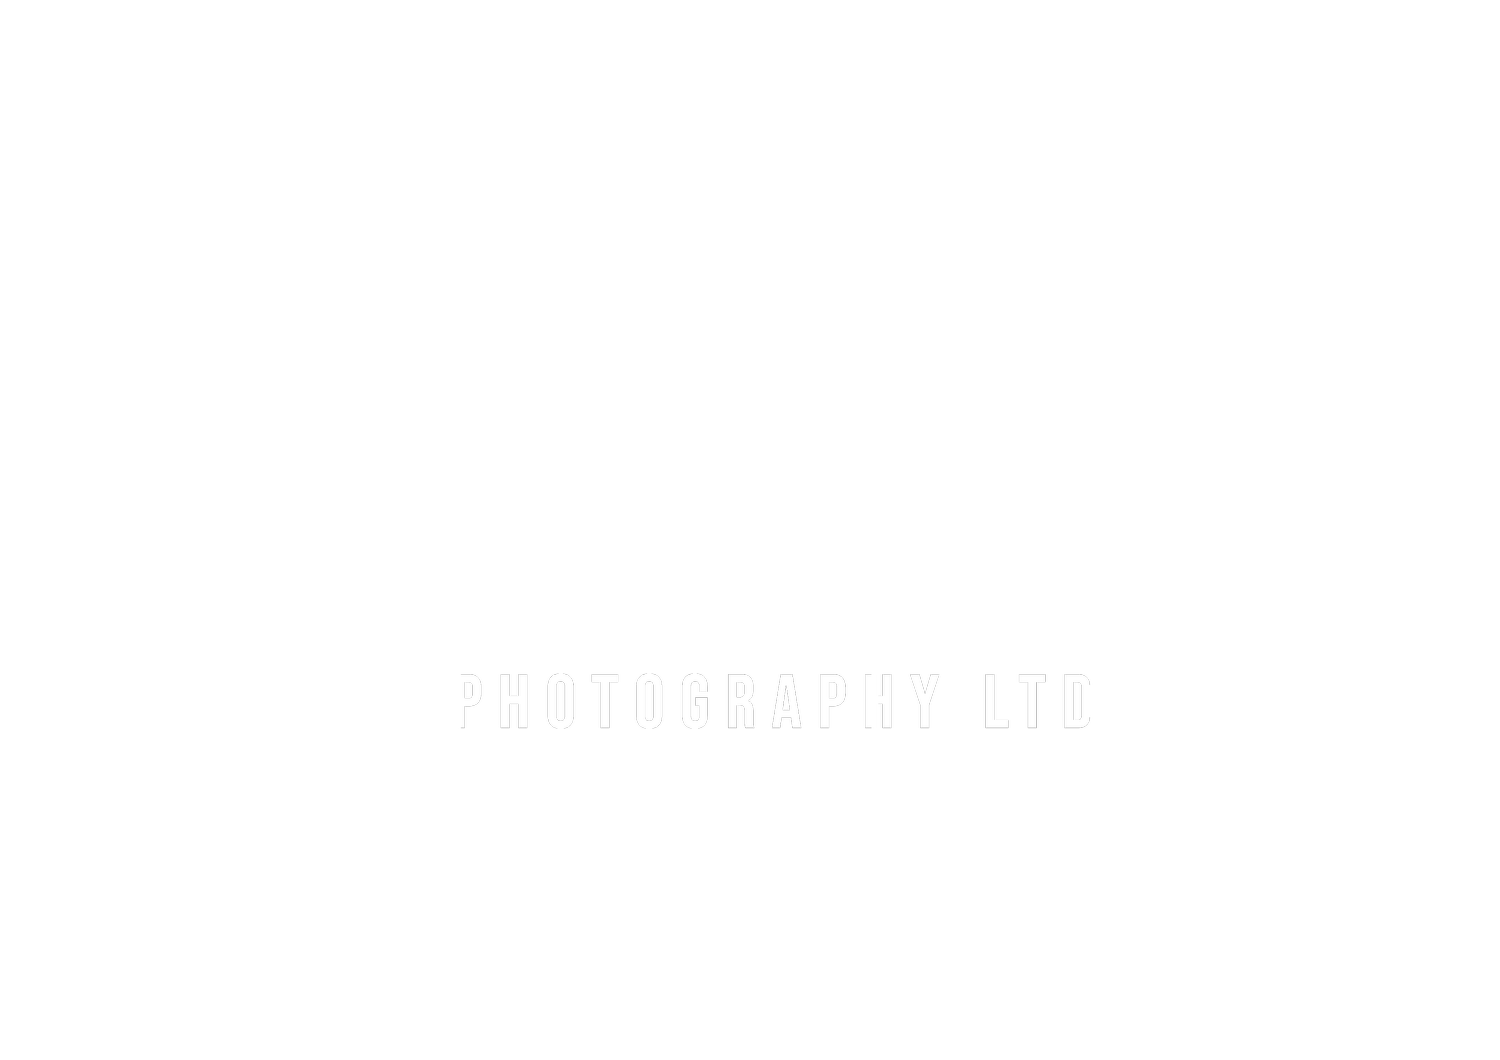 LUX PHOTOGRAPHY LTD